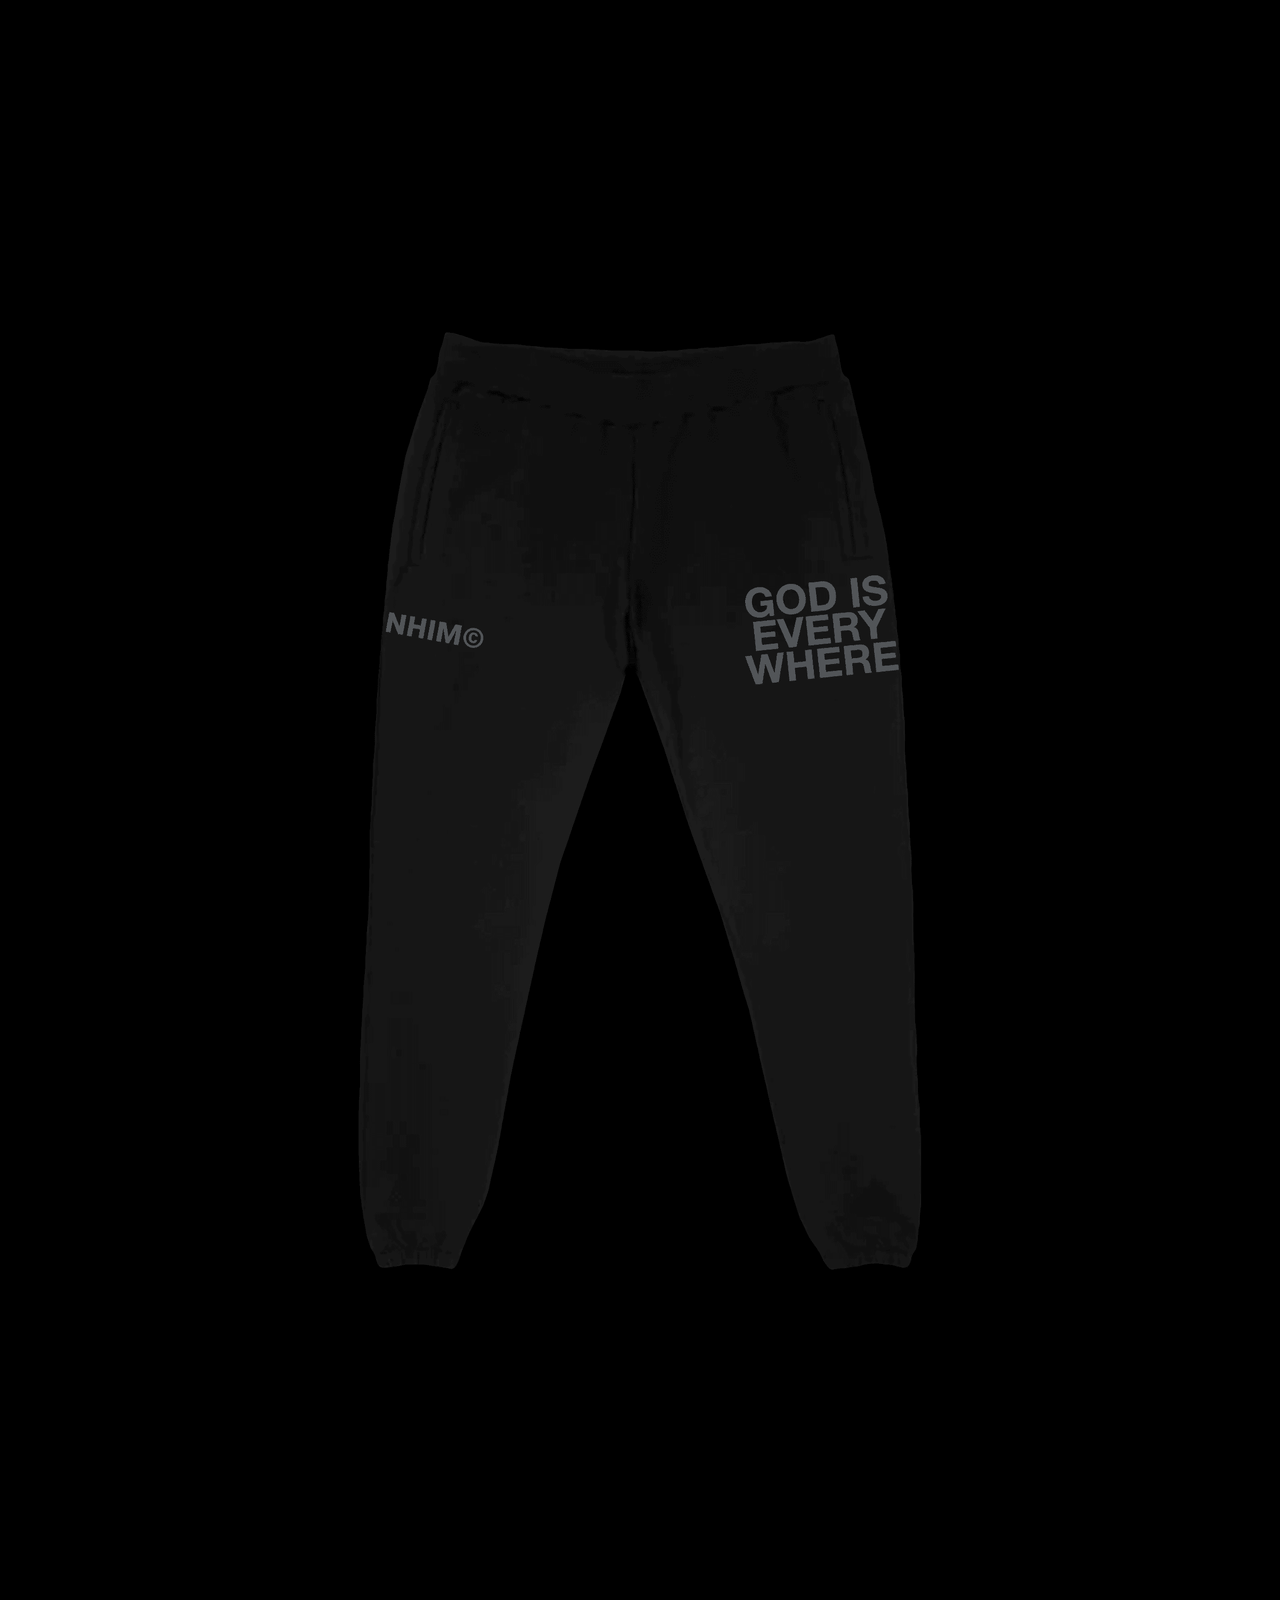 GOD IS EVERYWHERE black premium sweatpants by NHIM APPAREL Christian clothing brand